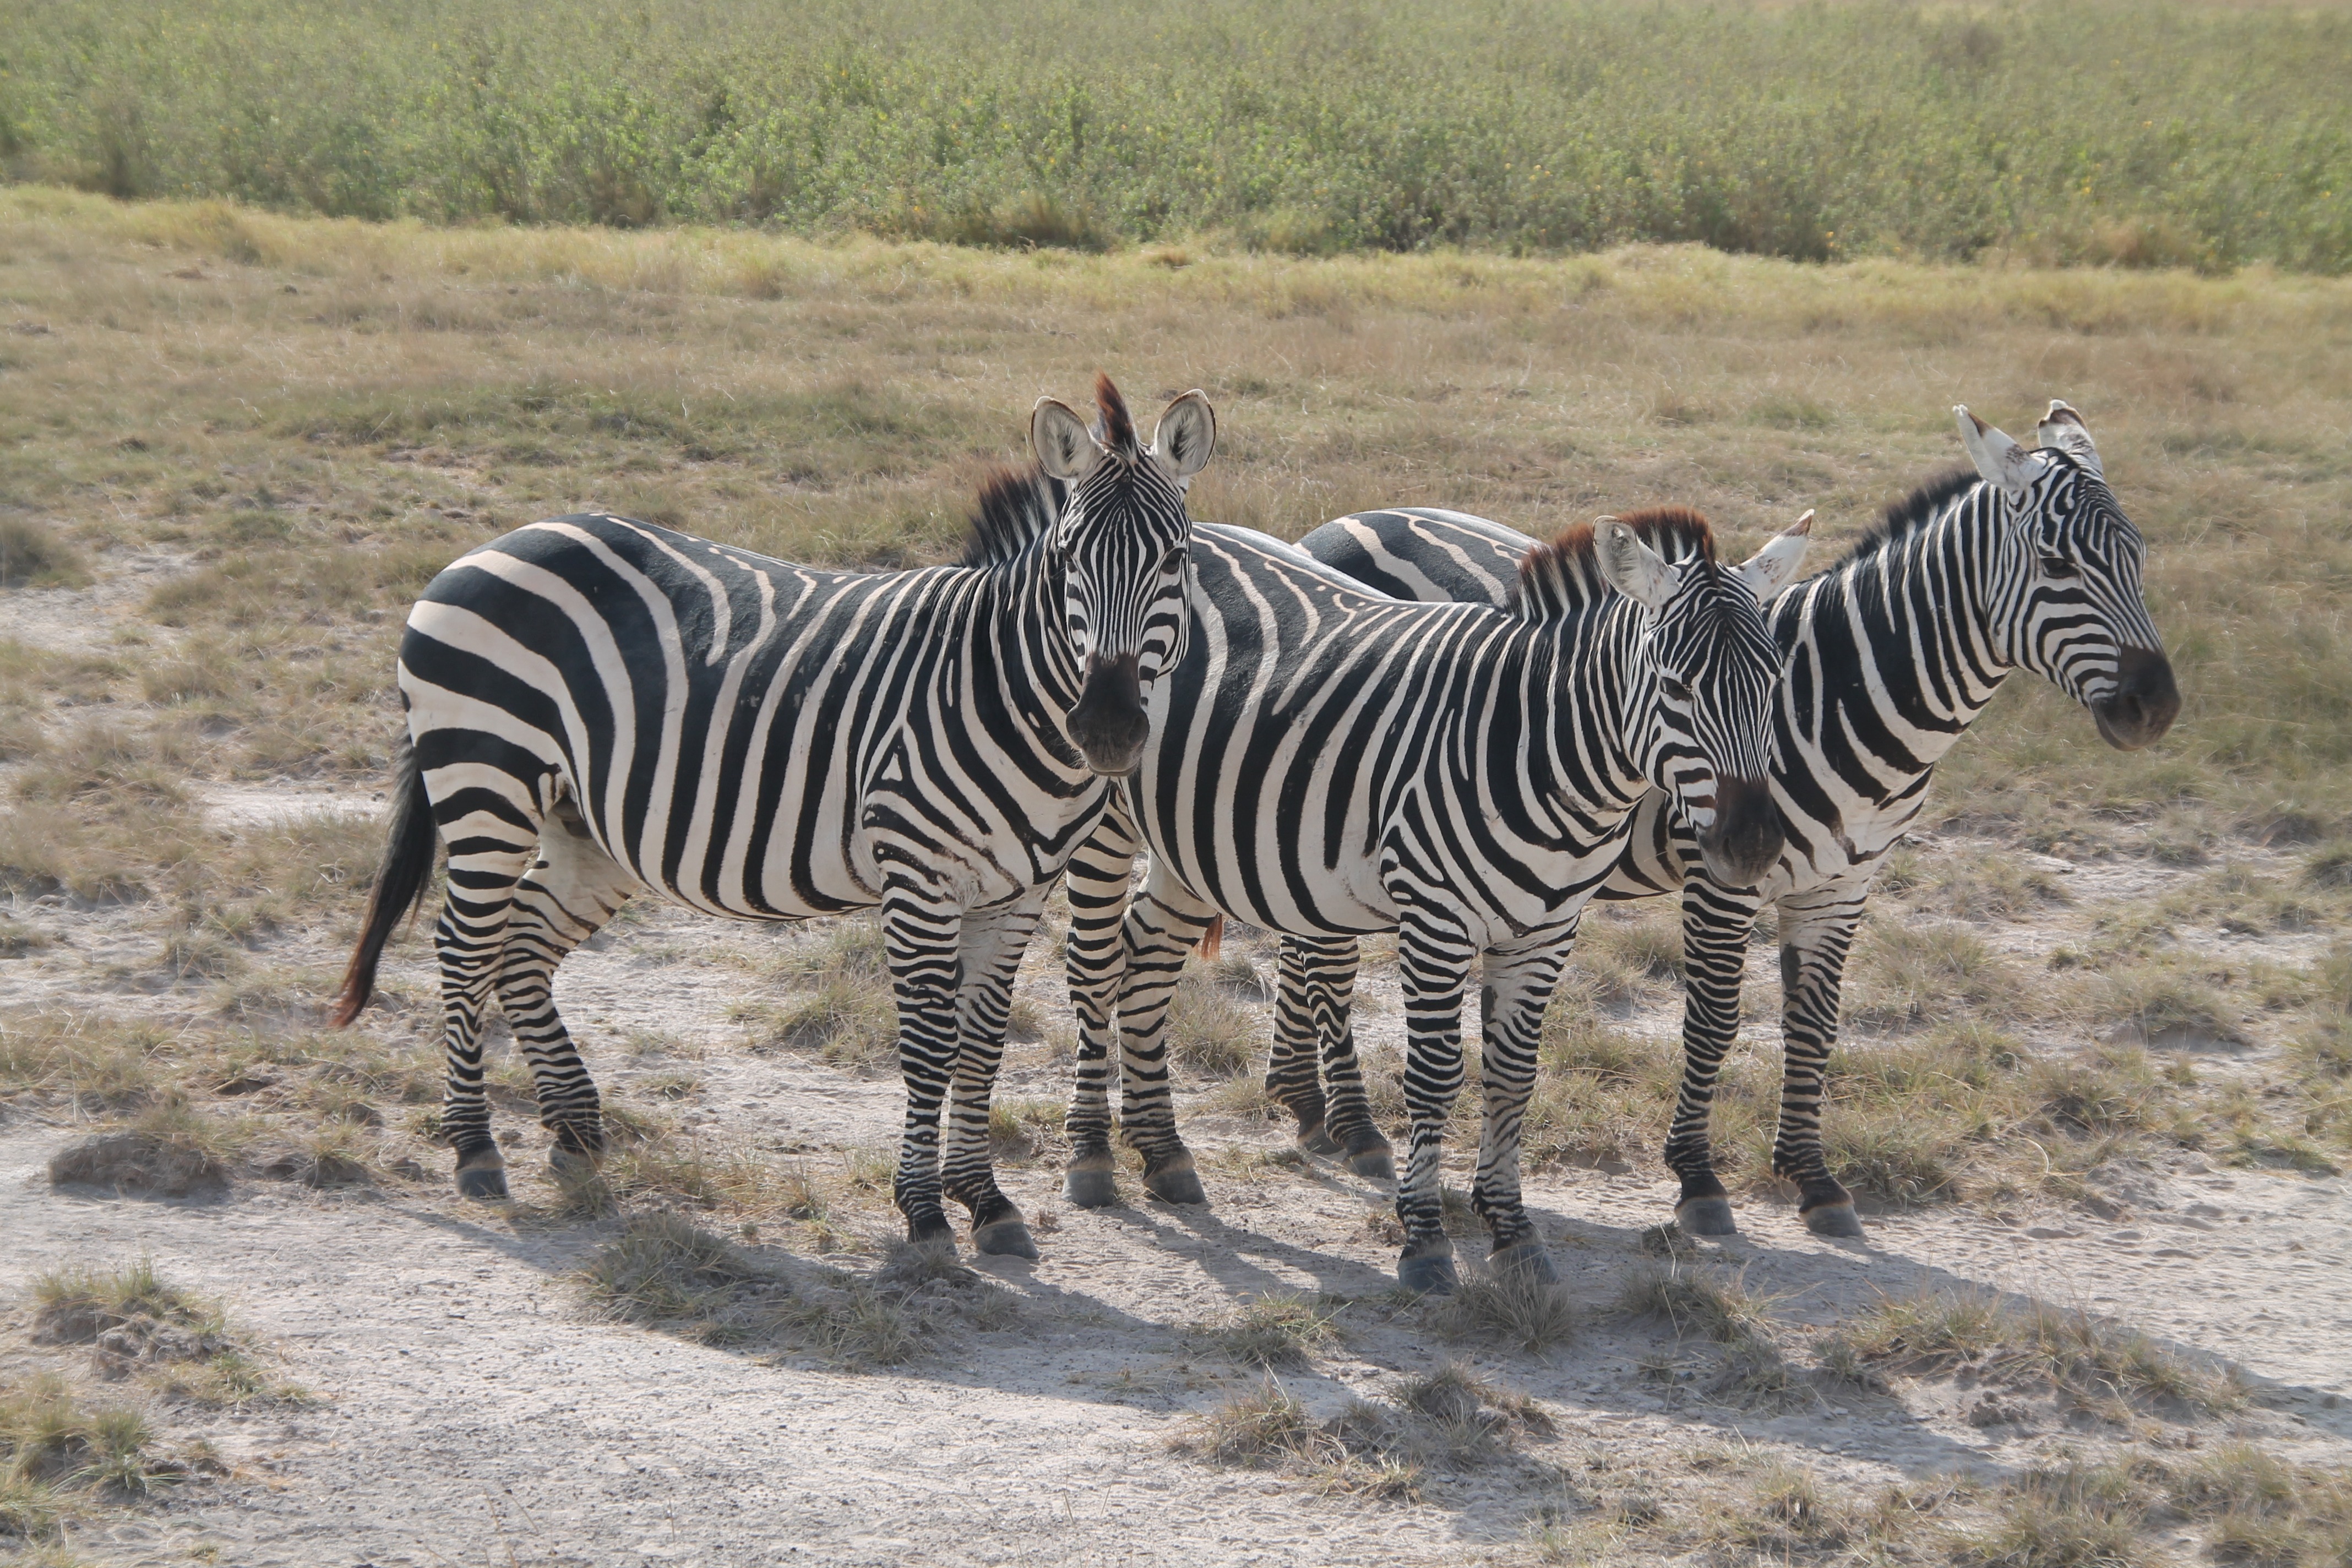 Zebras in the Kenya wildlife free image